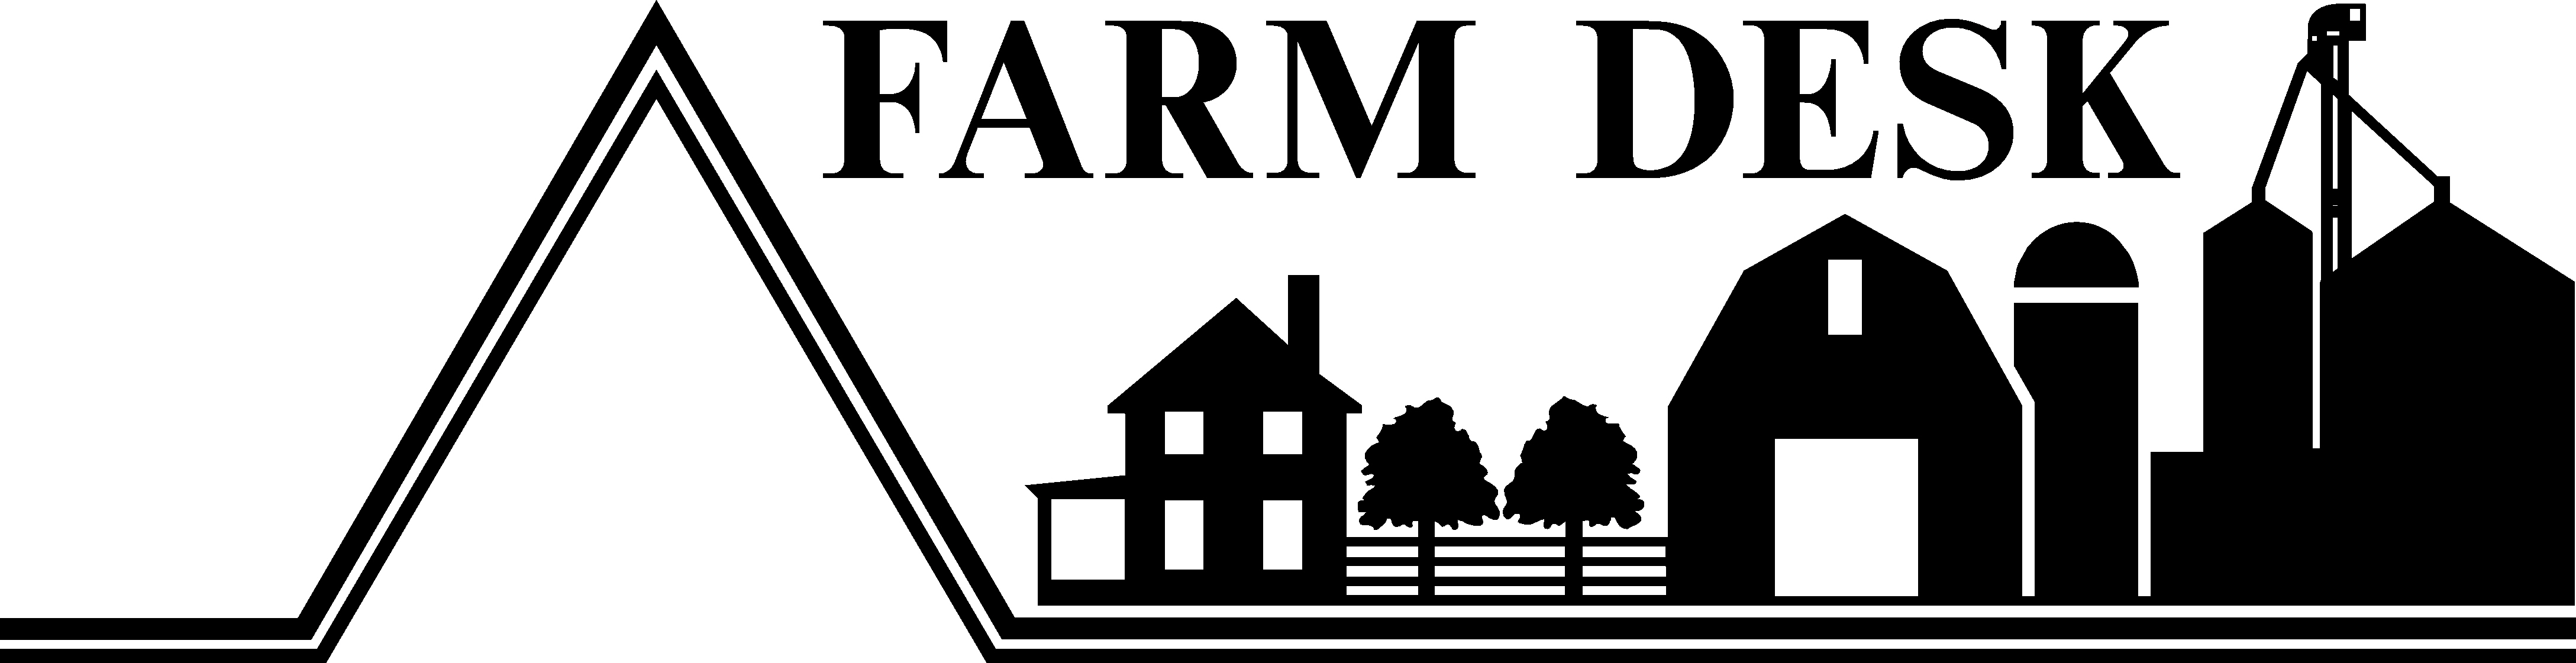 click to visit farm desk website